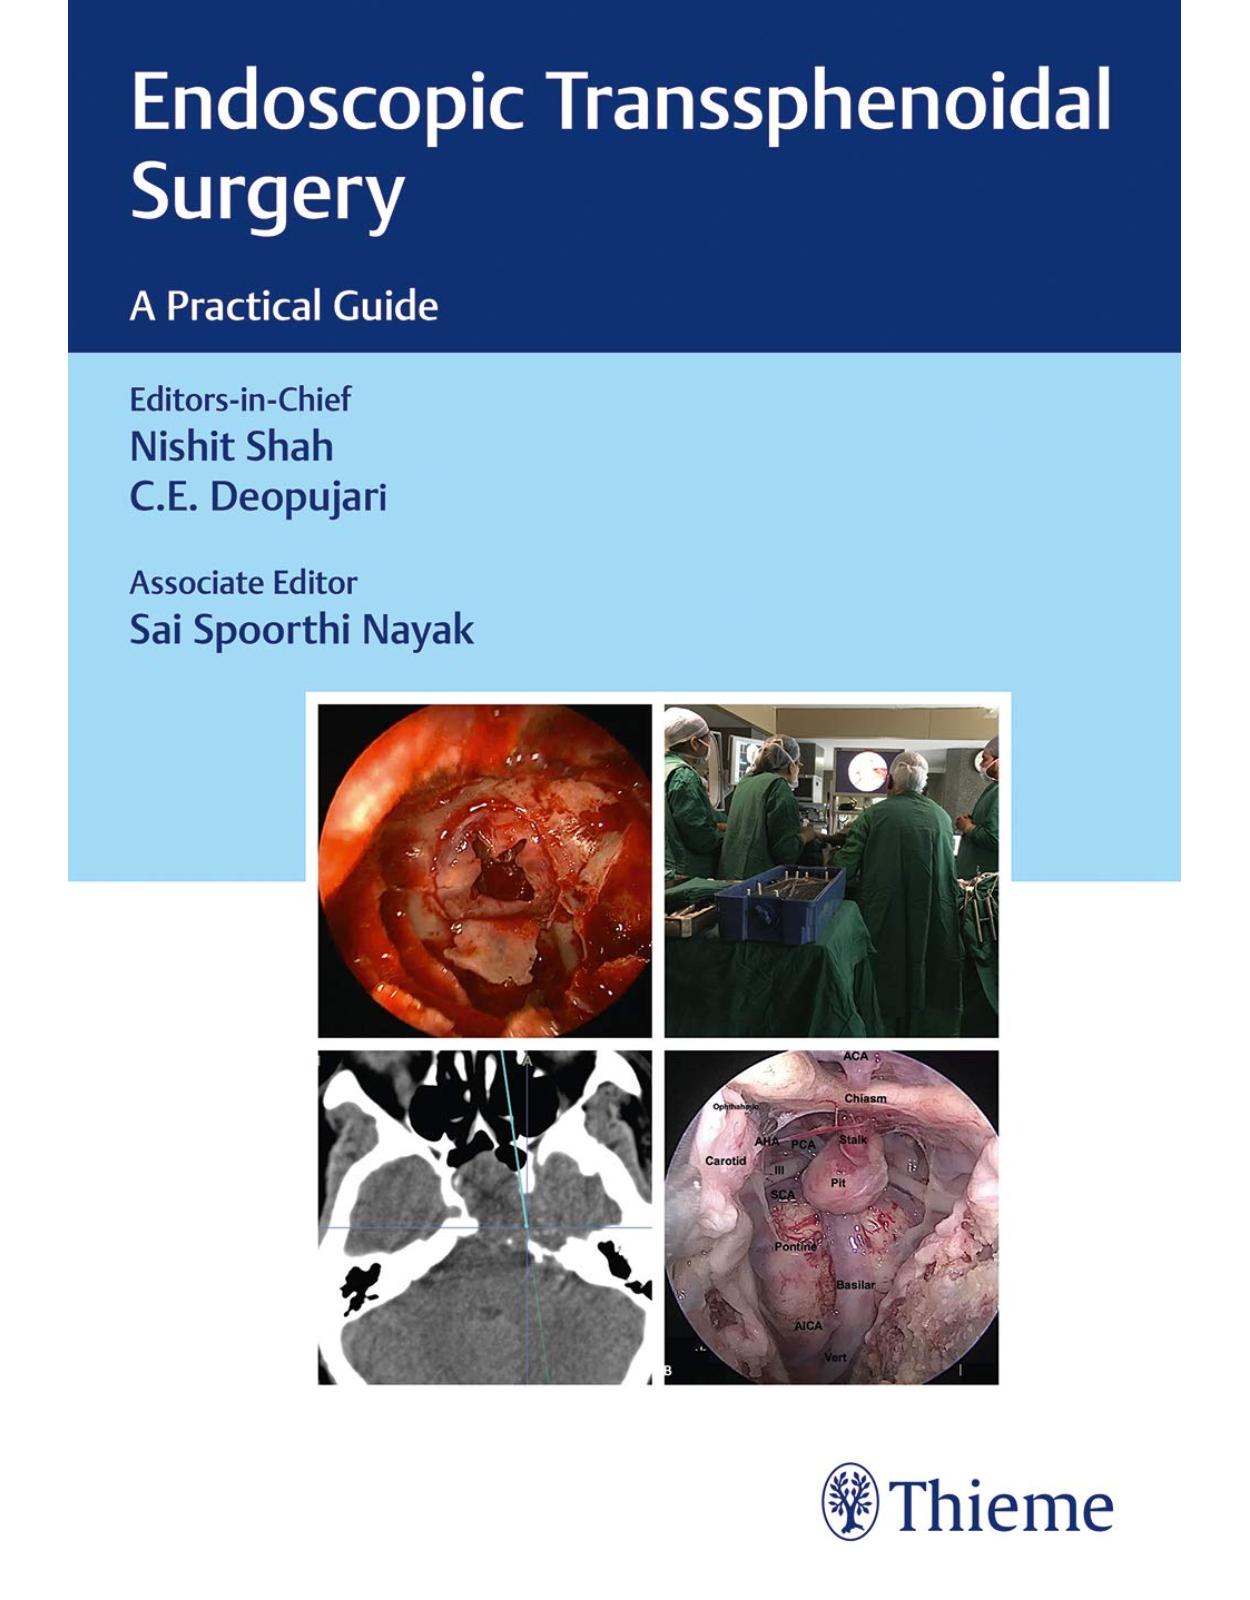 Endoscopic Transsphenoidal Surgery: A Practical Guide